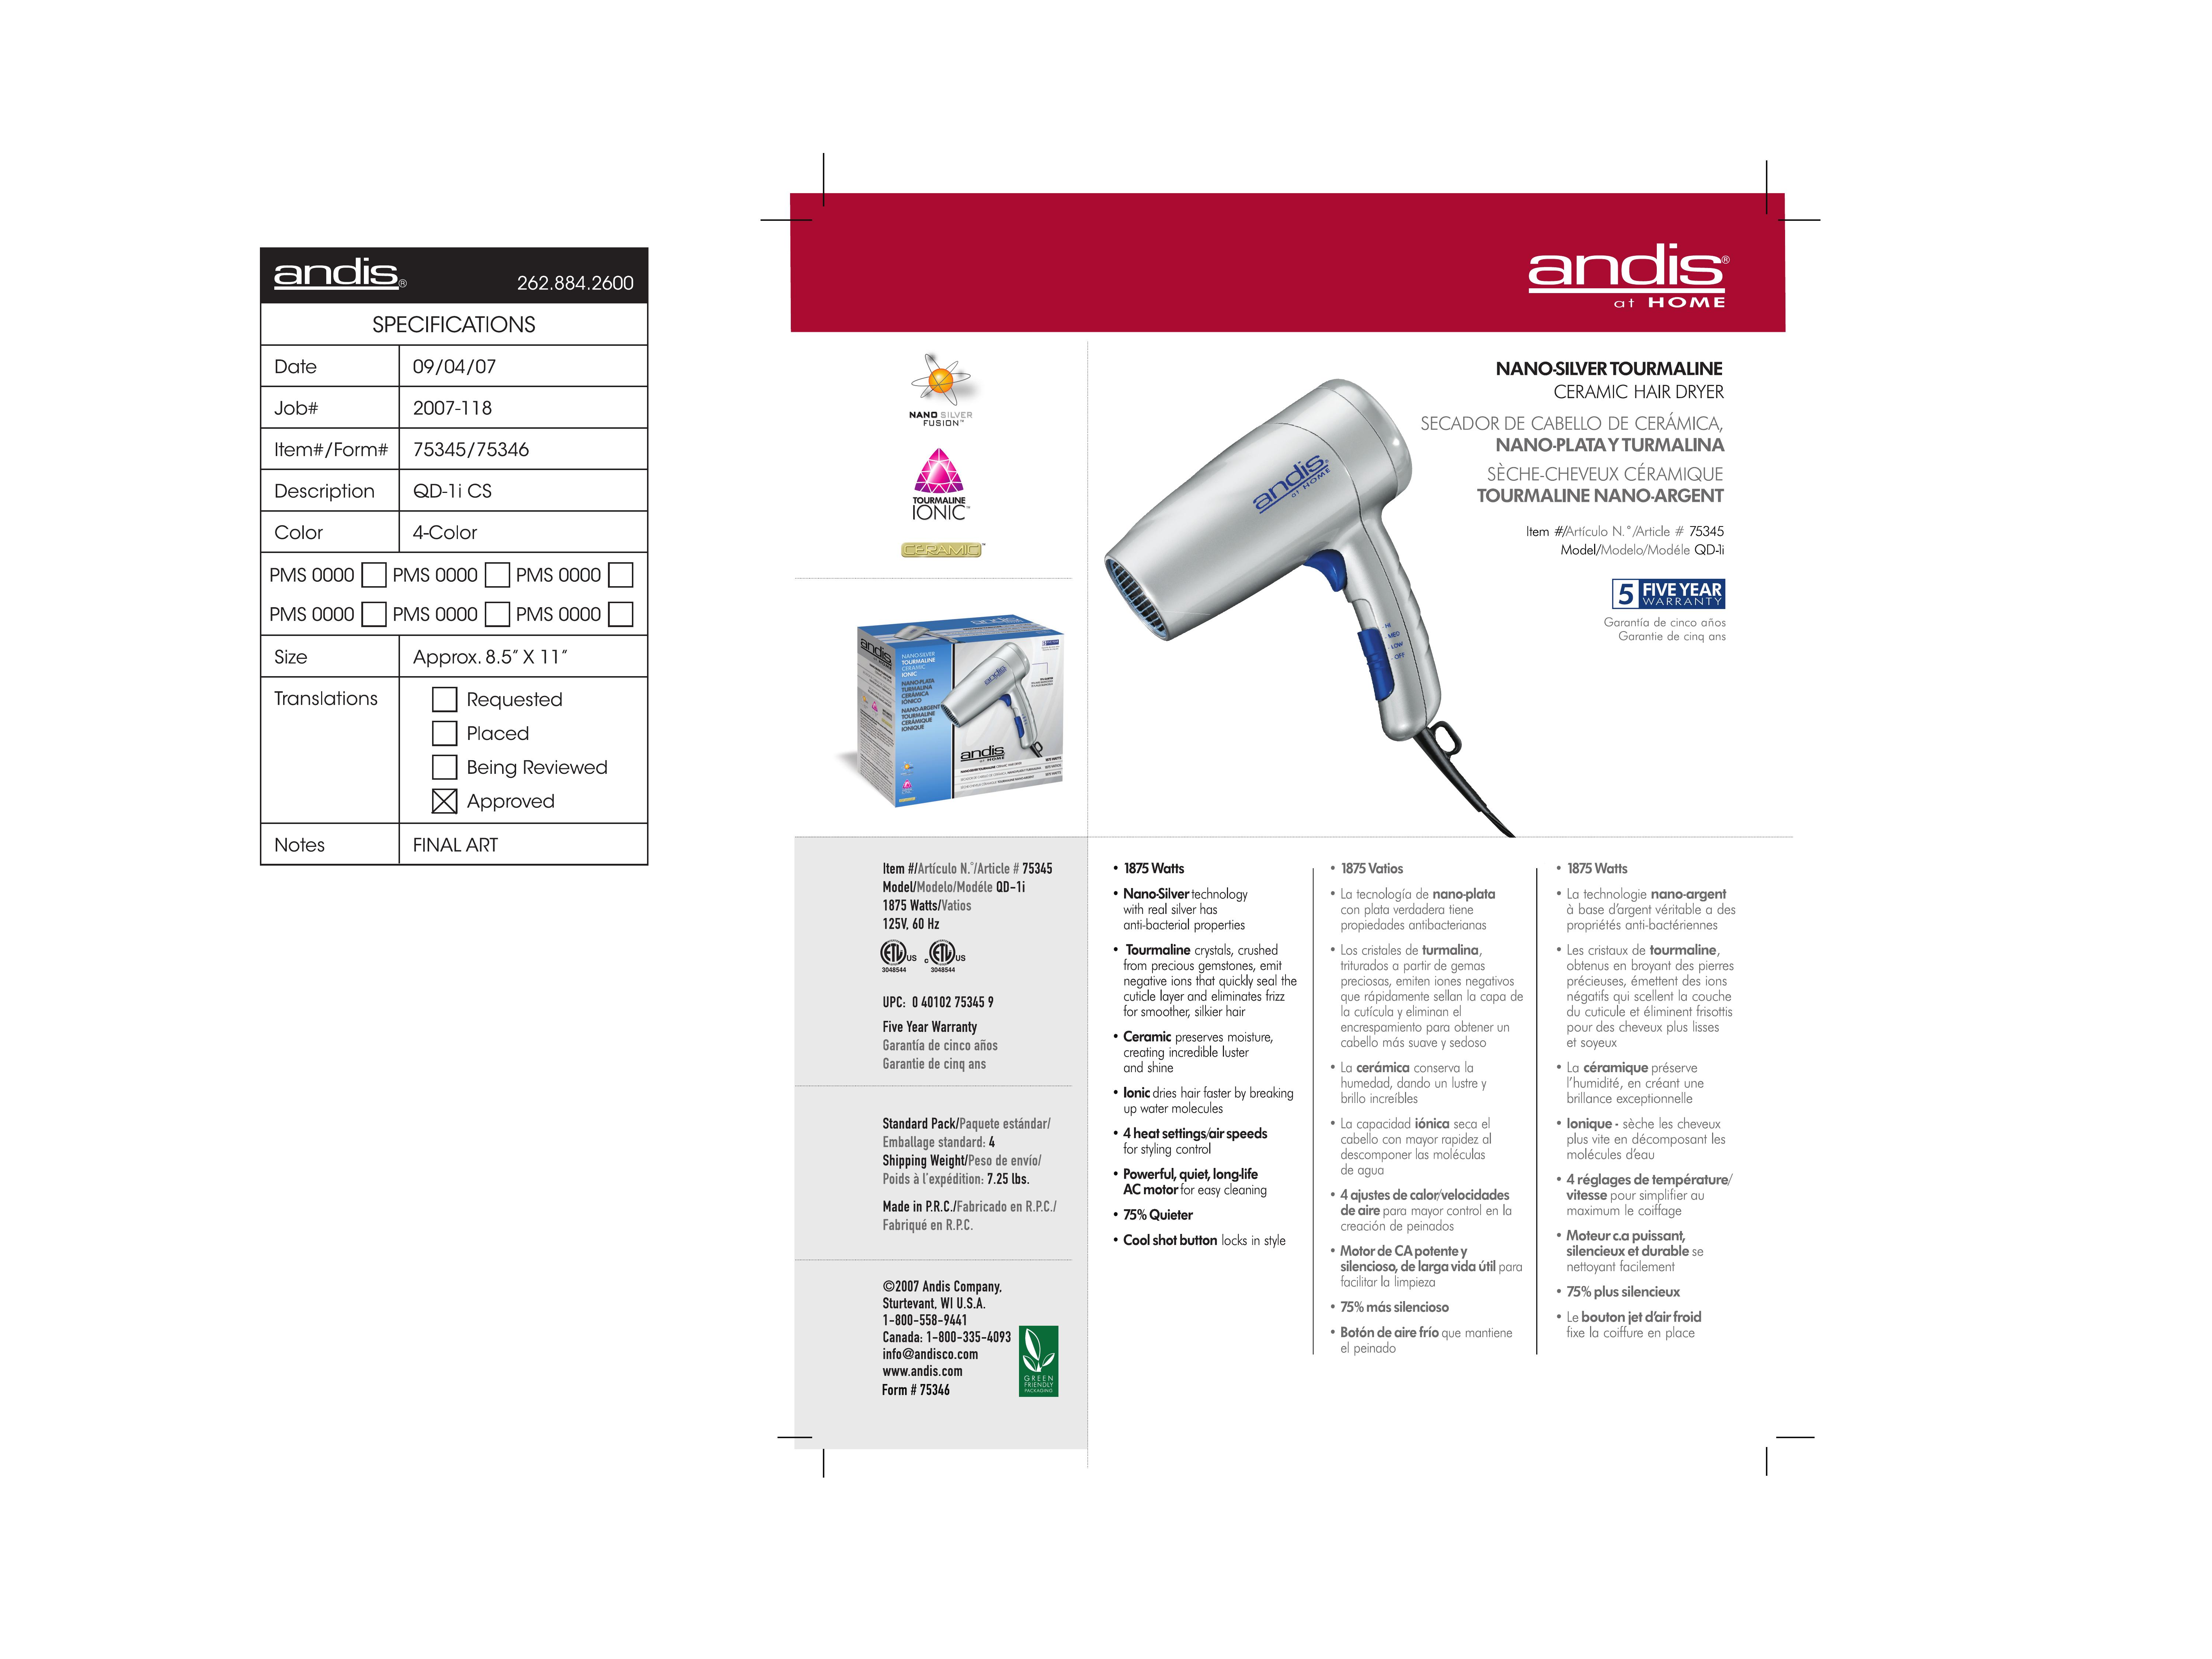 Andis Company QD-1i 75345 Hair Dryer User Manual